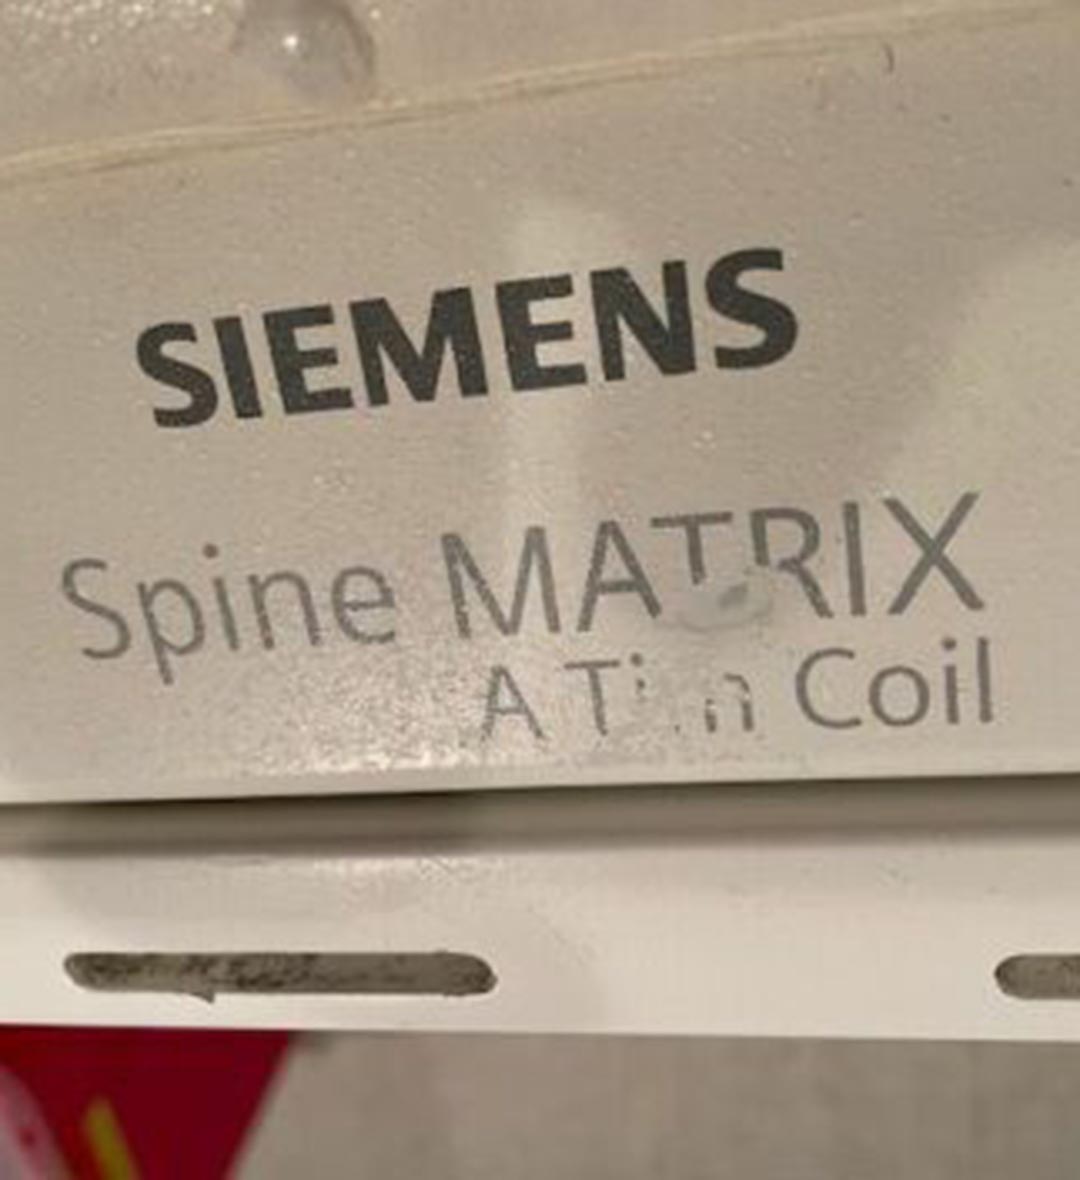 2005 Siemens Magnetom Espree 1.5T MRI System